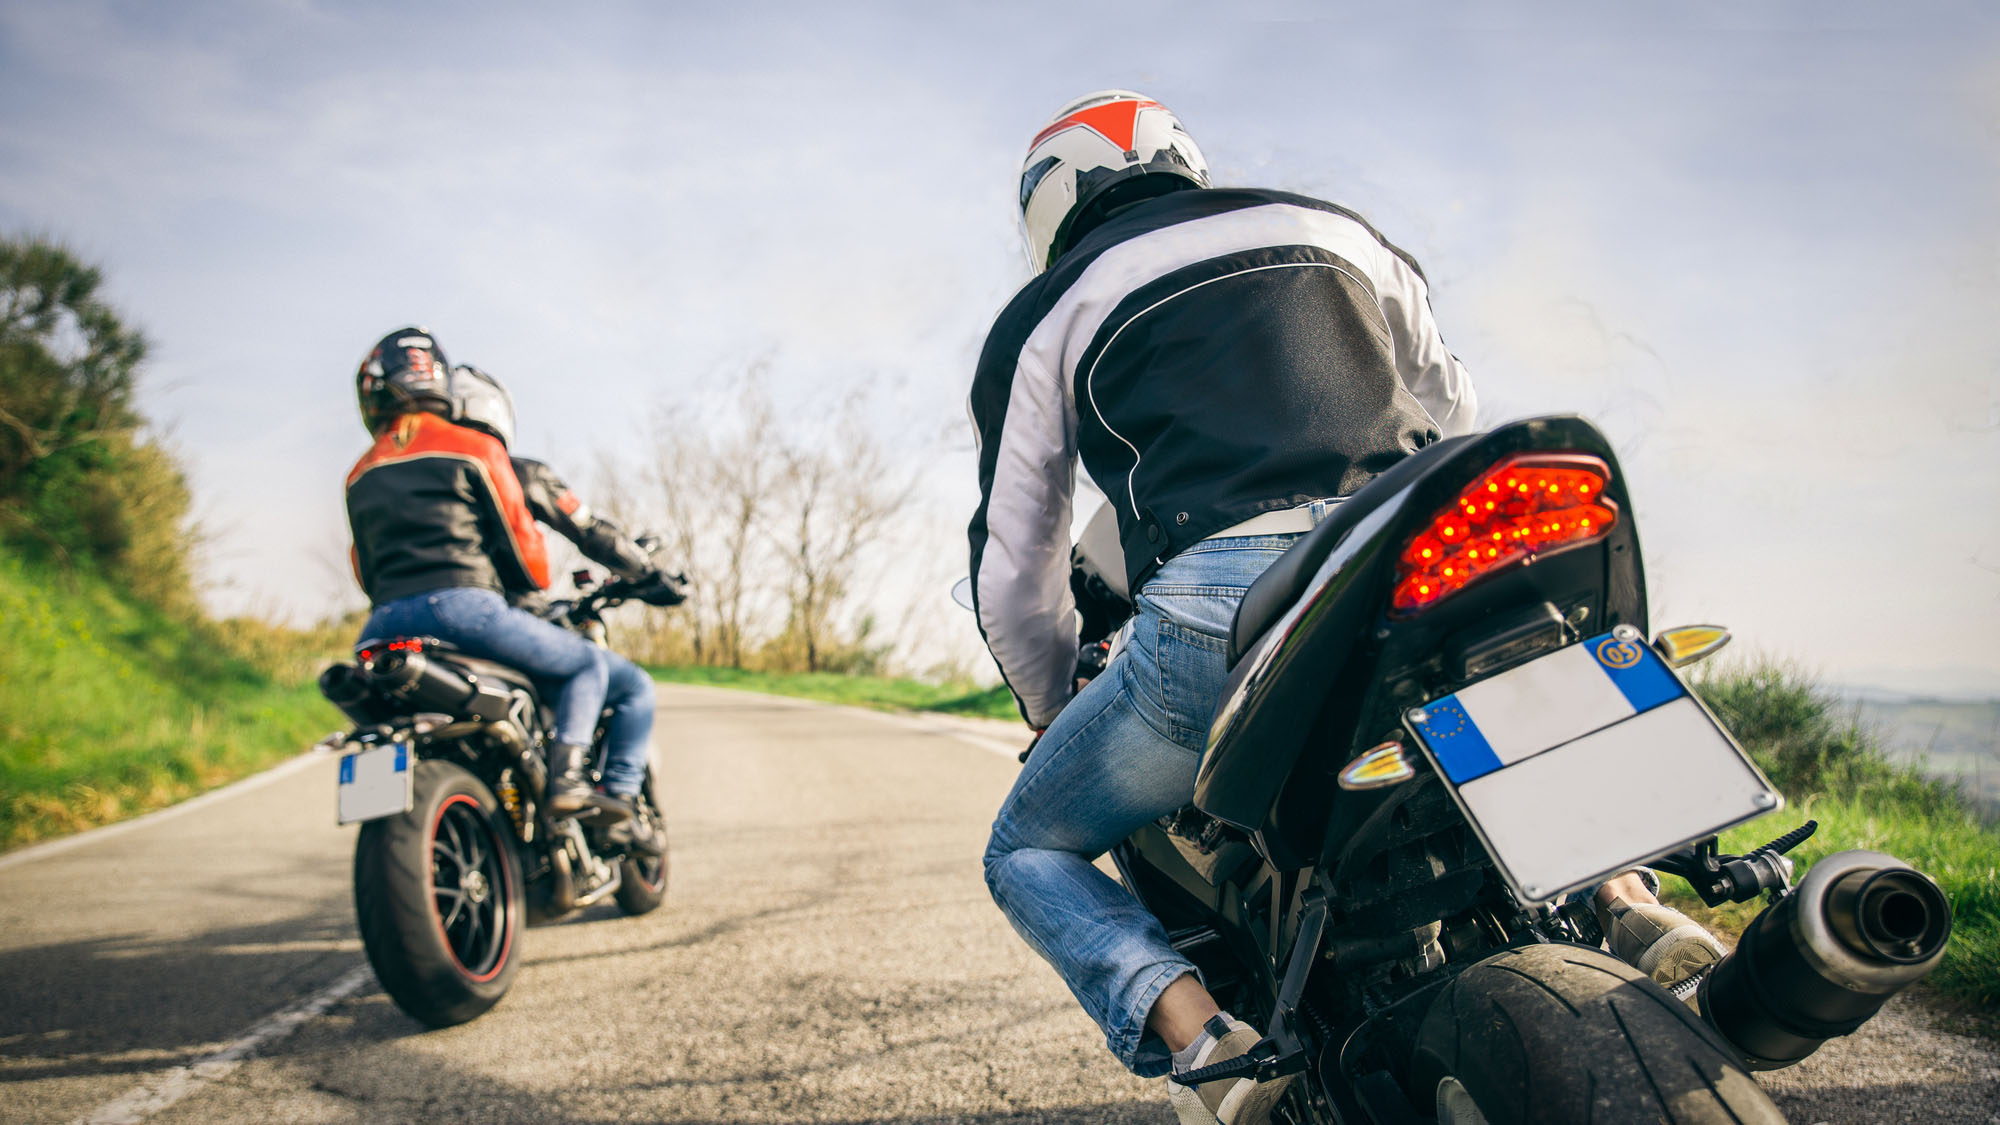 beginner motorcycles